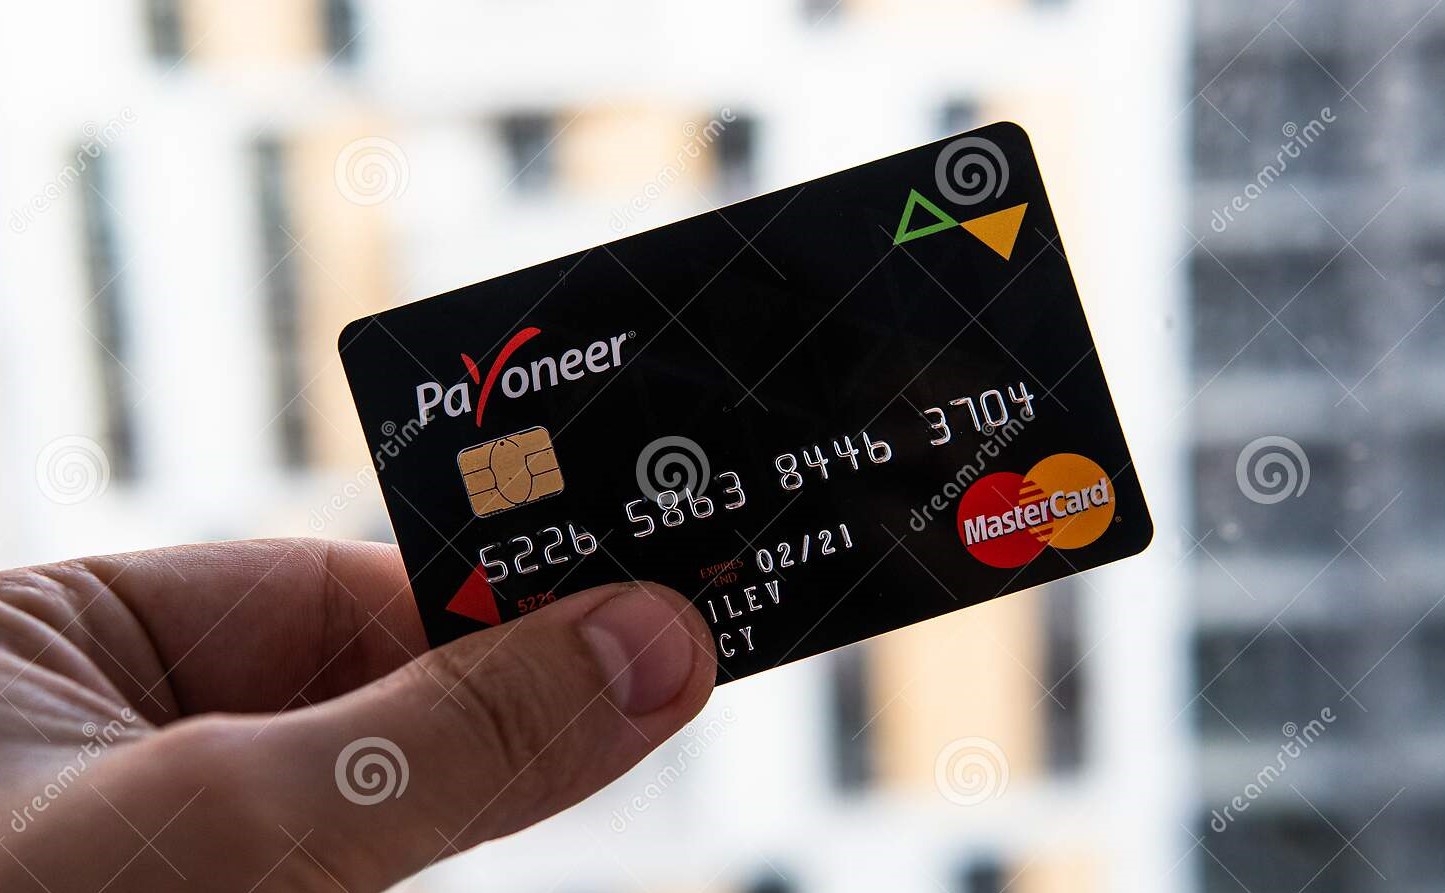 30464Payoneer Ready Card With Verified Payoneer Account